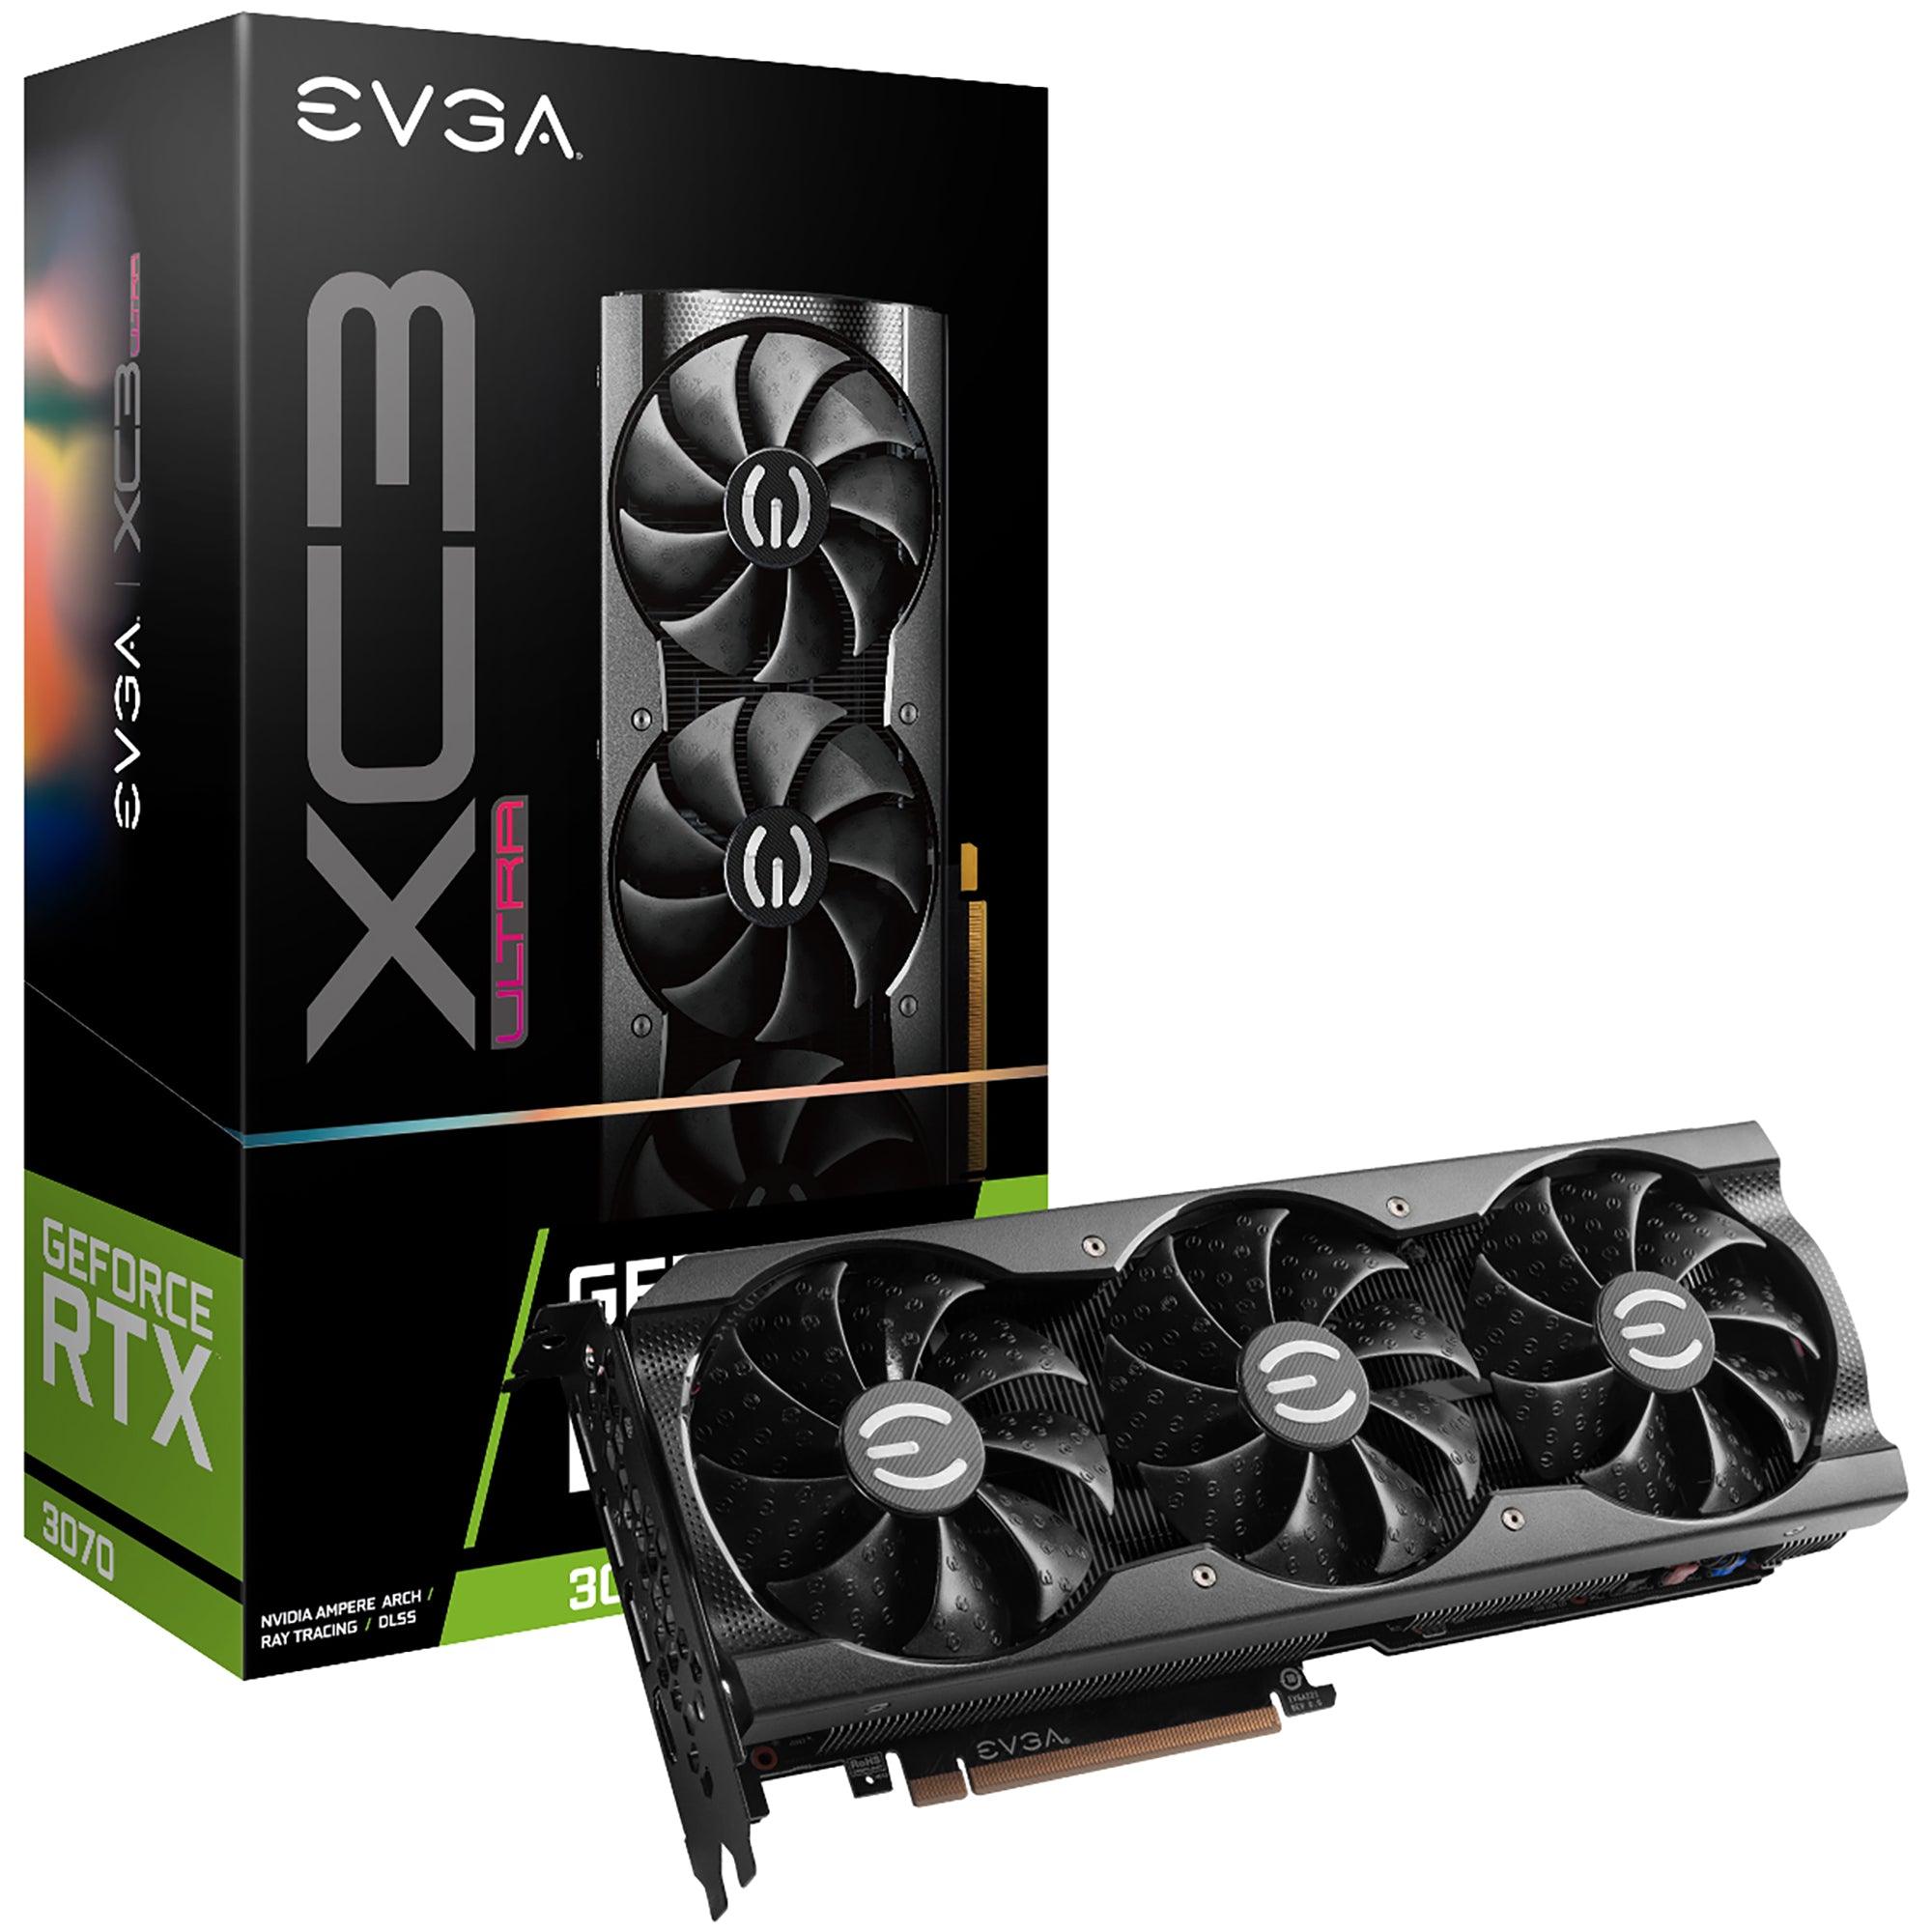 EVGA Geforce RTX 3070 XC3 Ultra Gaming 8GB GDDR6 iCX3 Cooling (Open Box) - Todo Geek